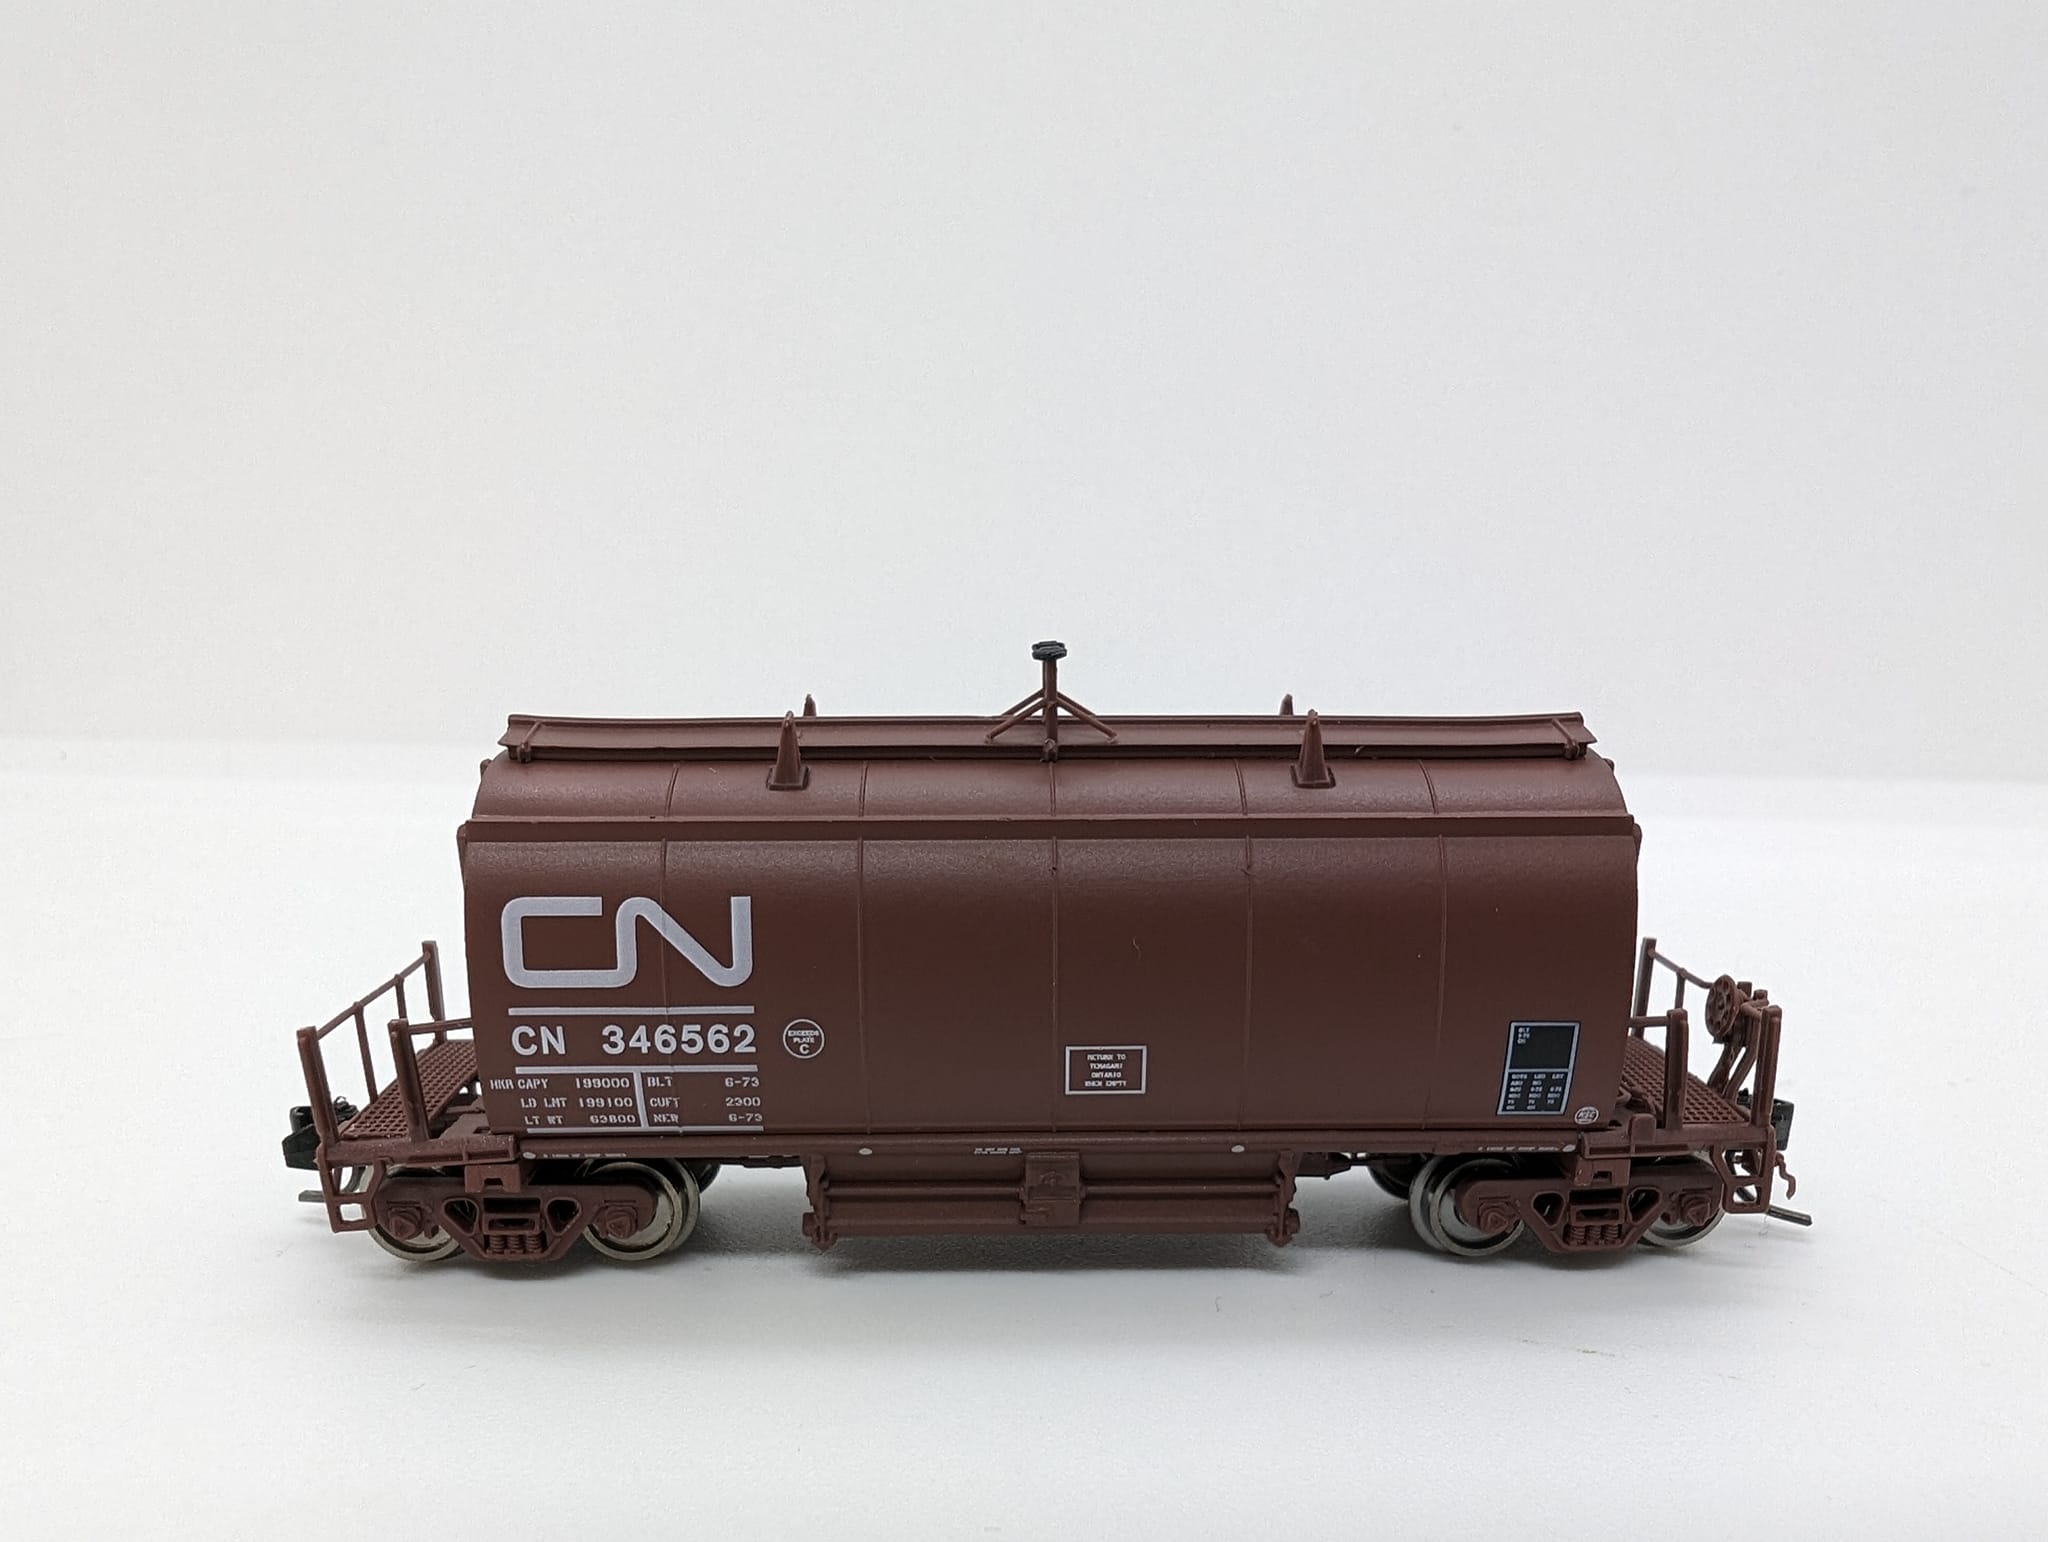 Otter Valley Railroad Model Trains - Tillsonburg, Ontario Canada :: N Scale